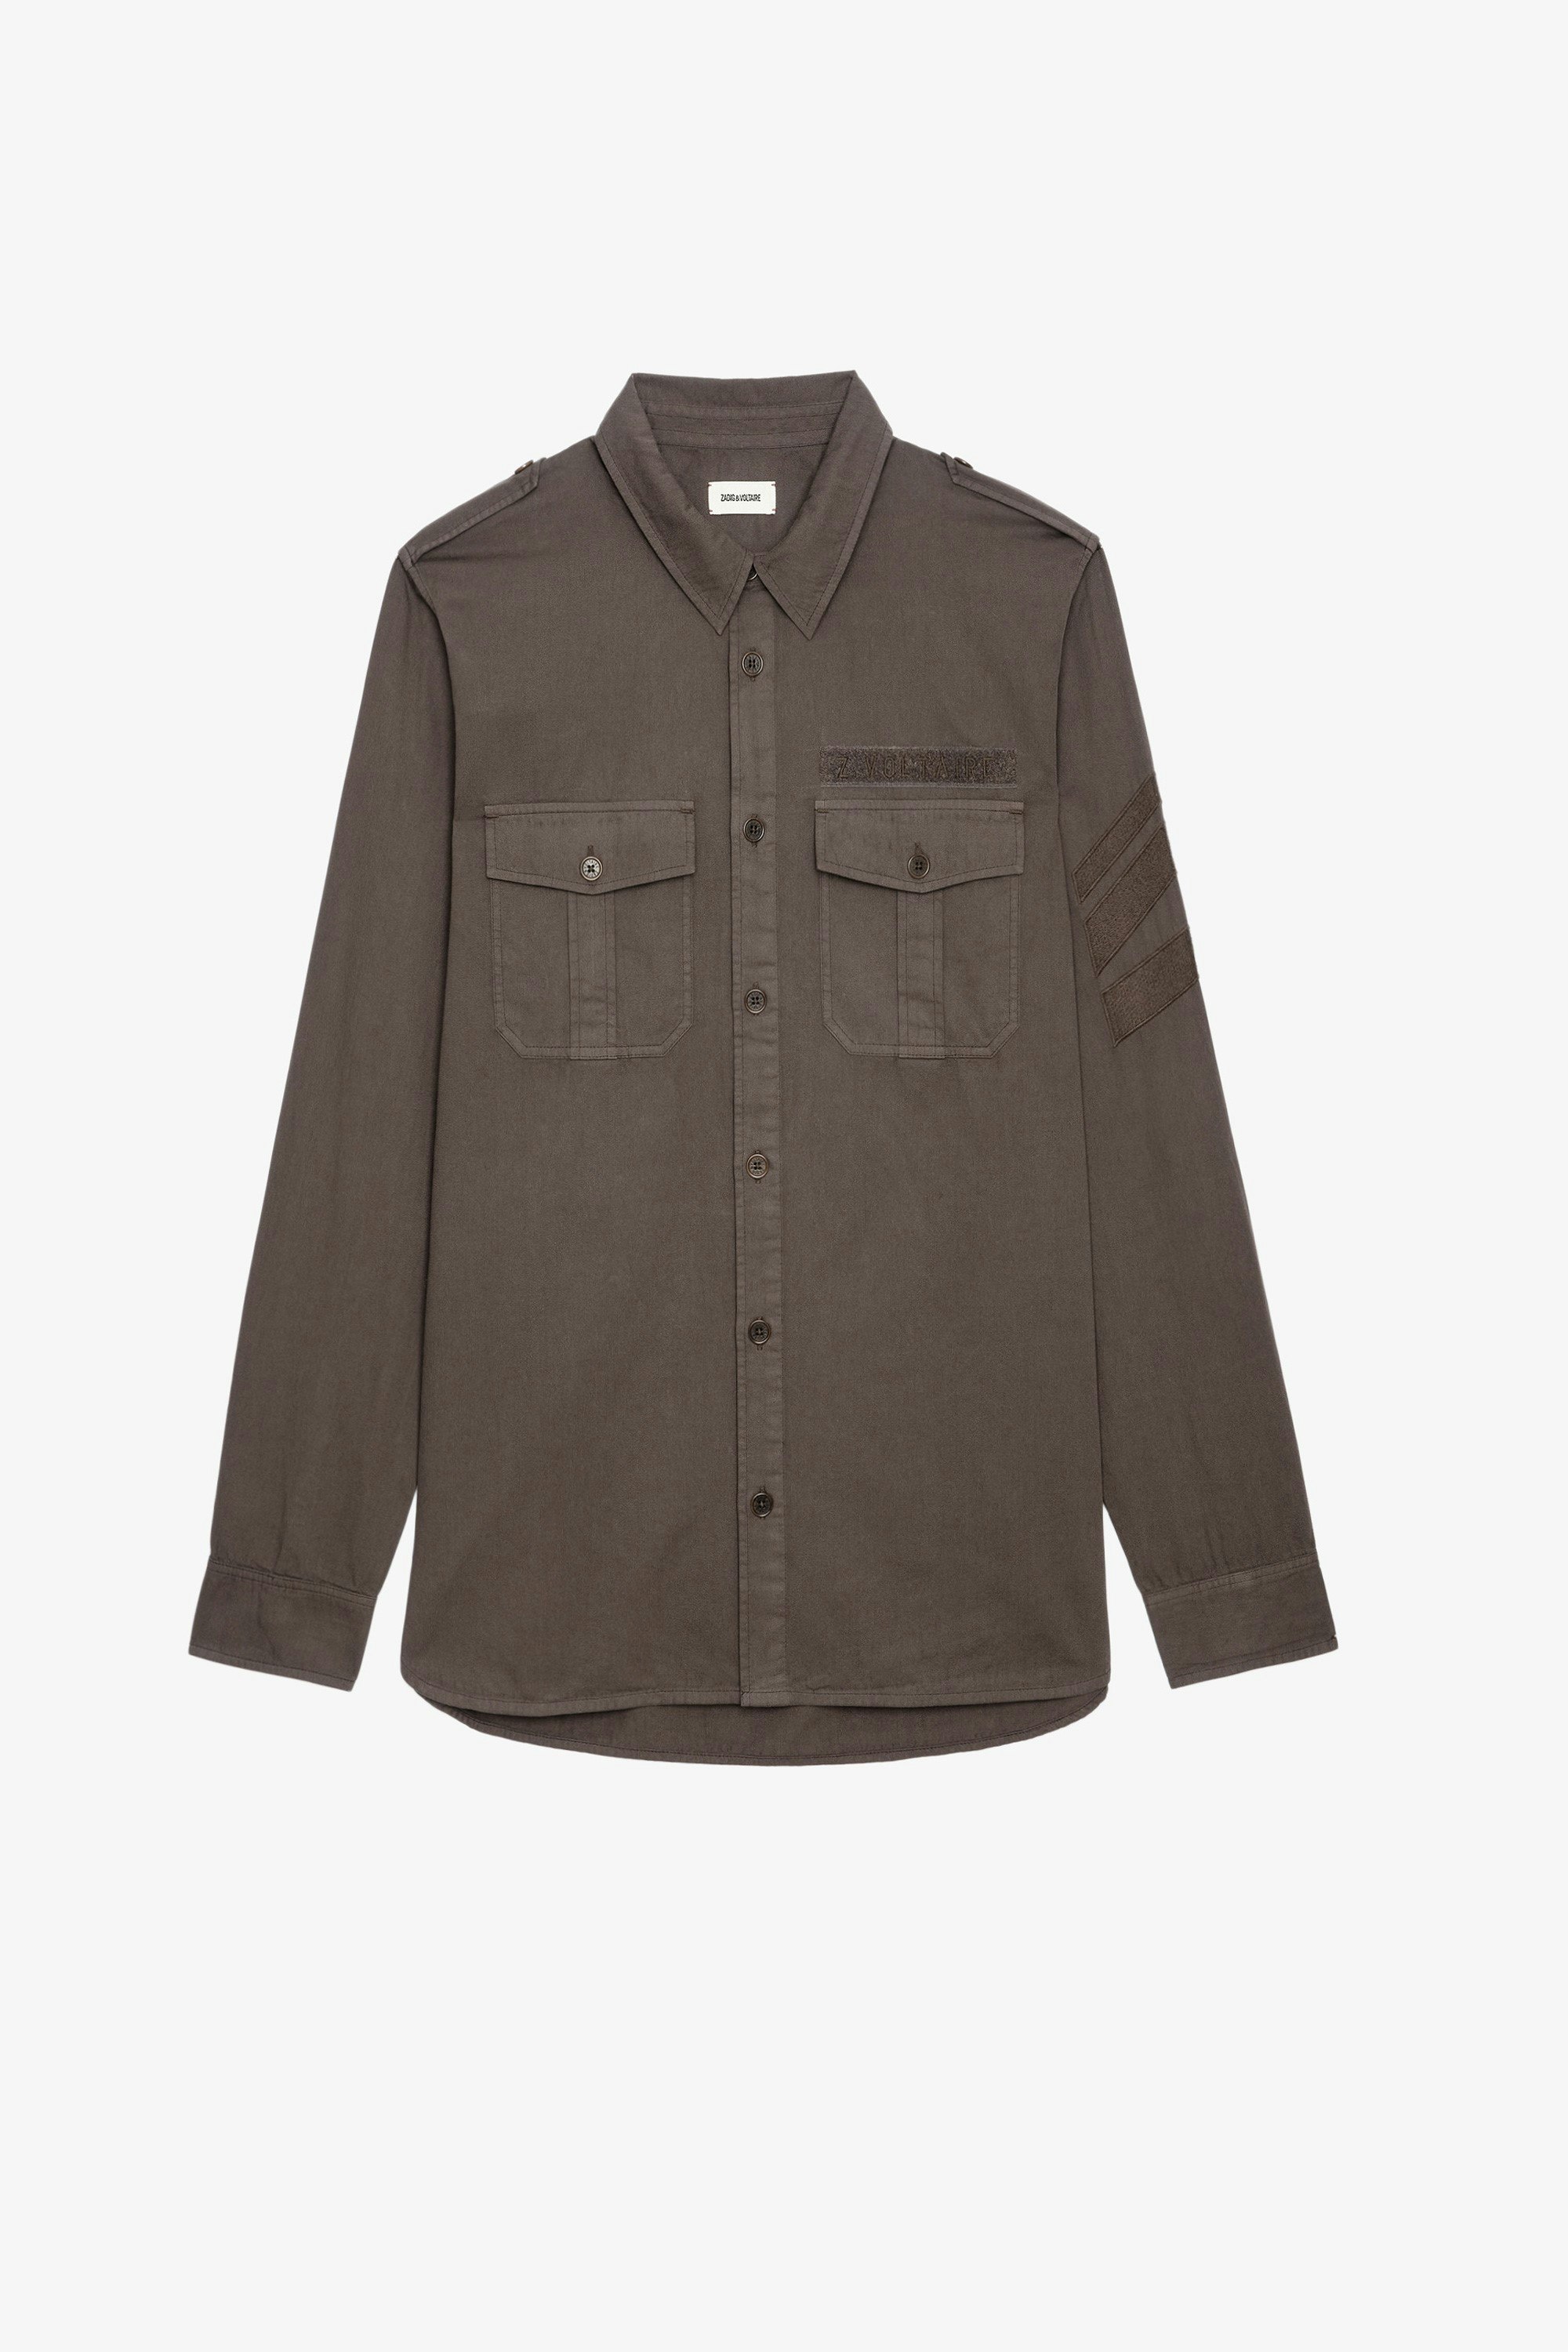 Serge シャツ Men's bronze cotton twill military shirt 